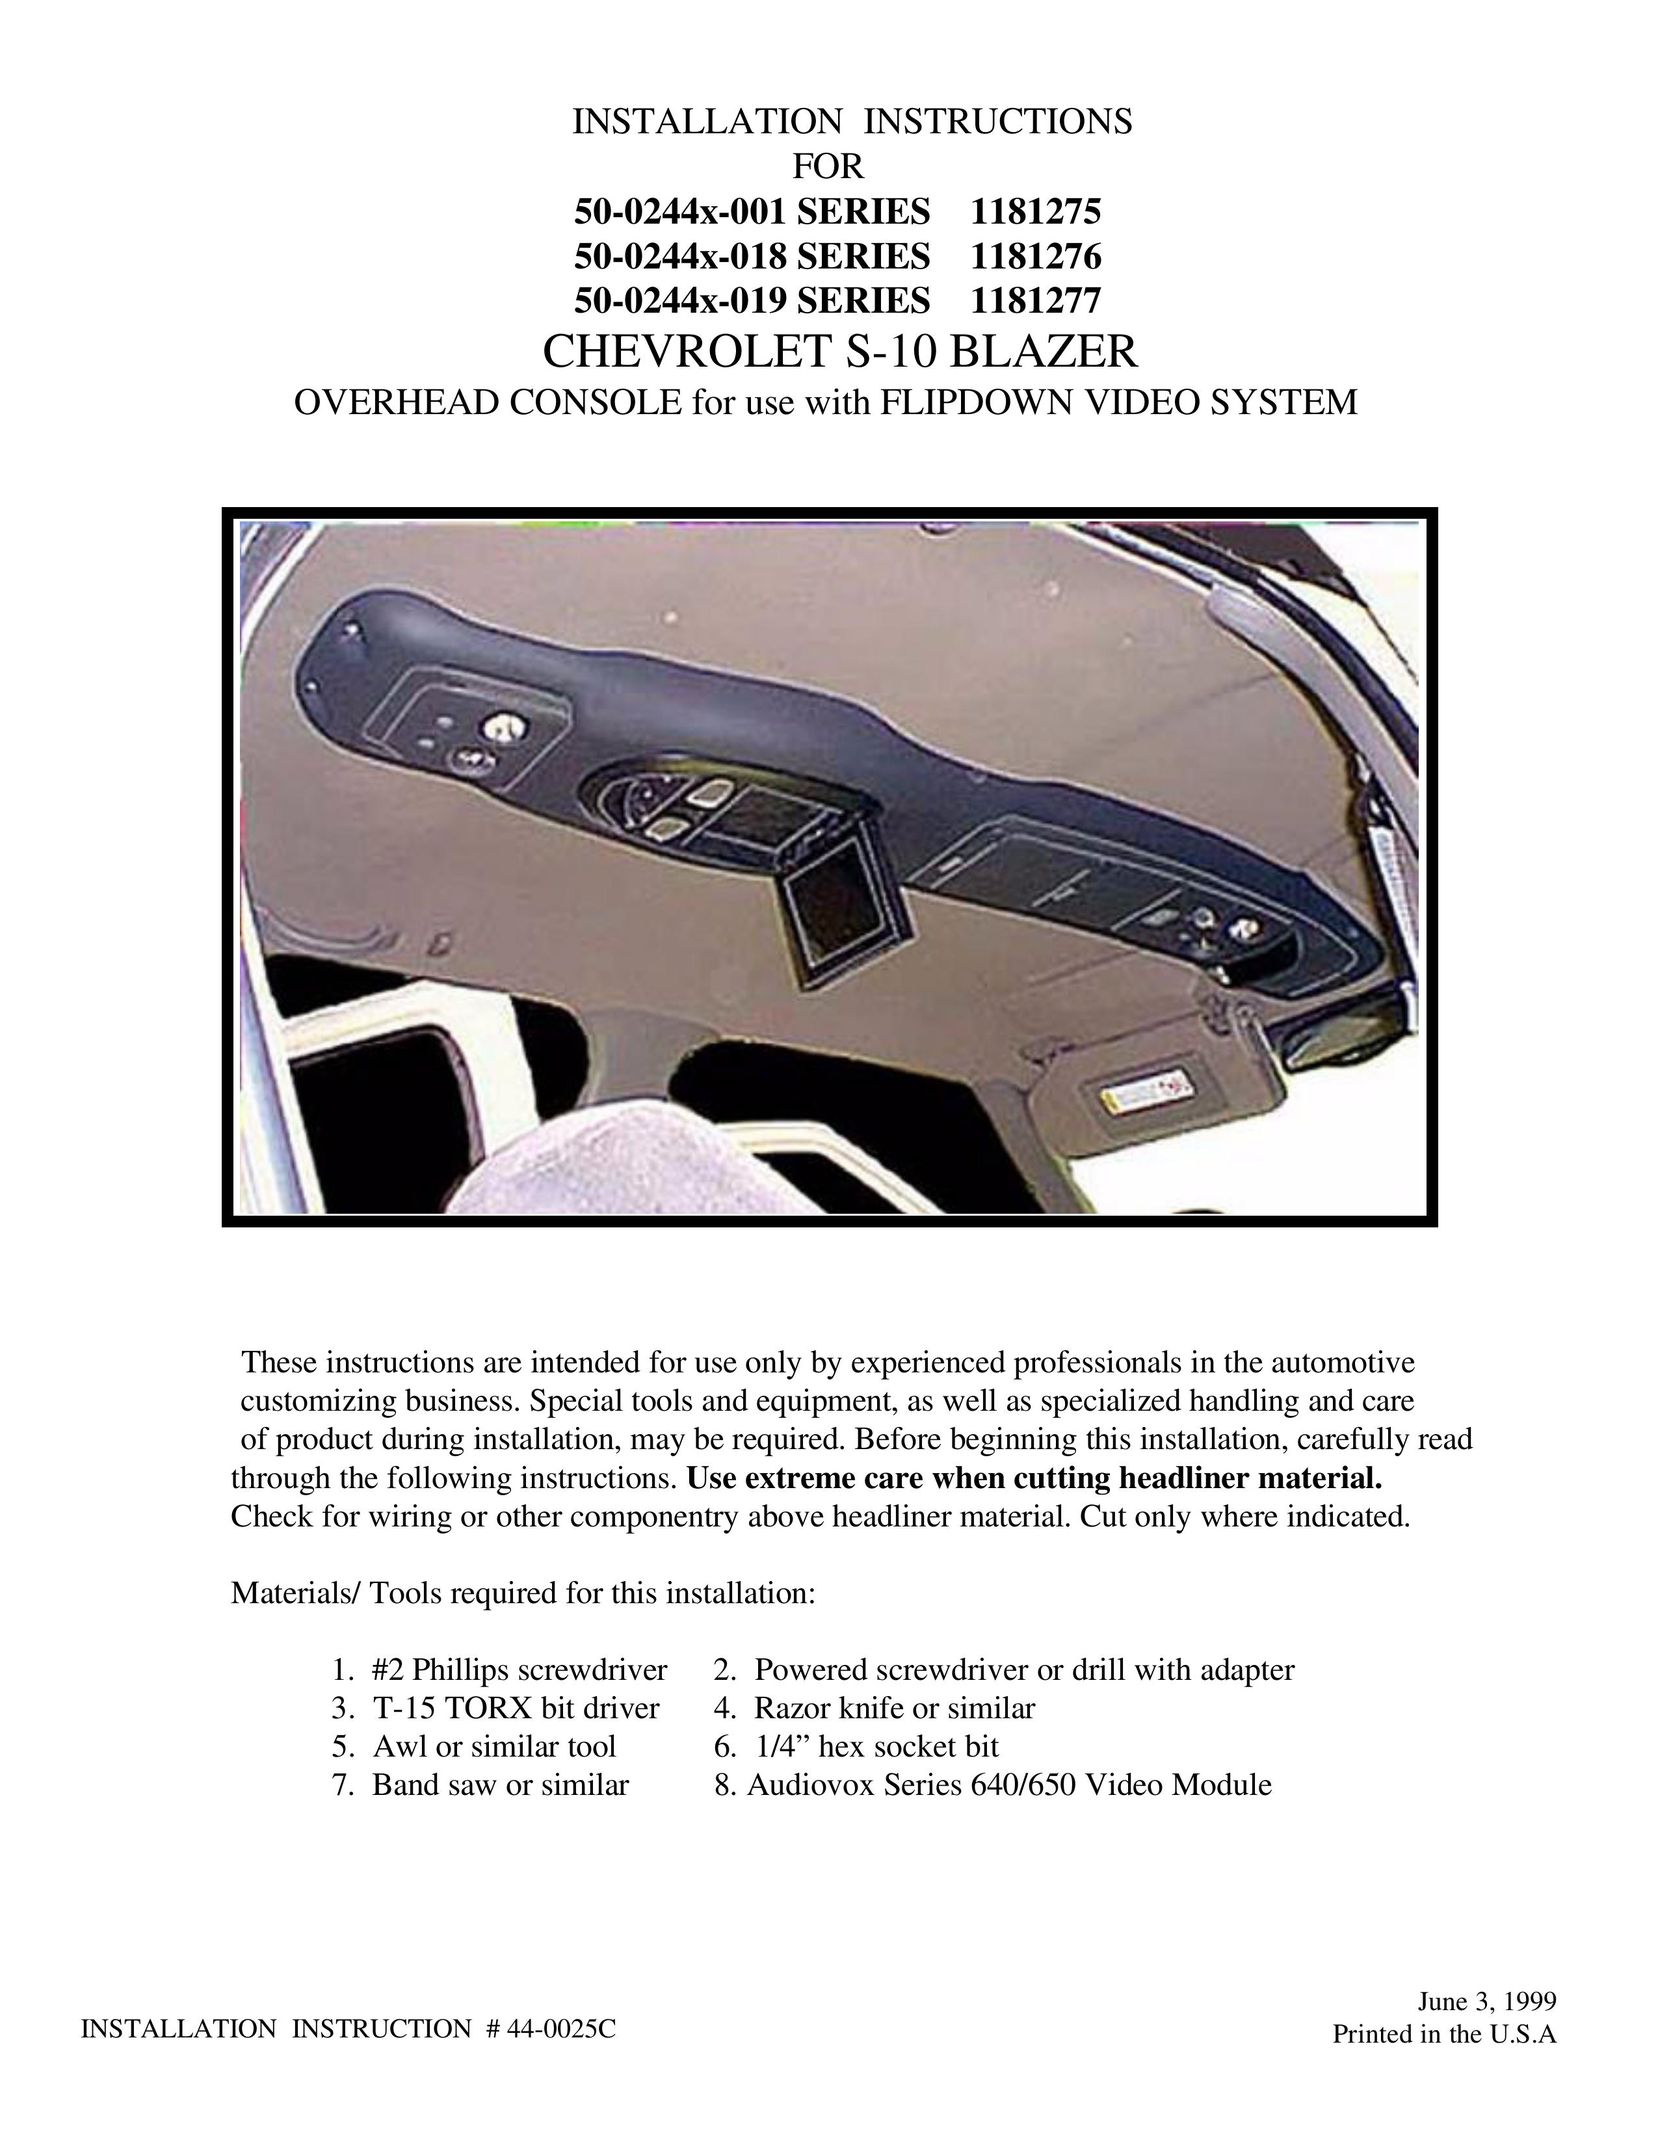 Audiovox 50-0244x-018 SERIES Car Video System User Manual